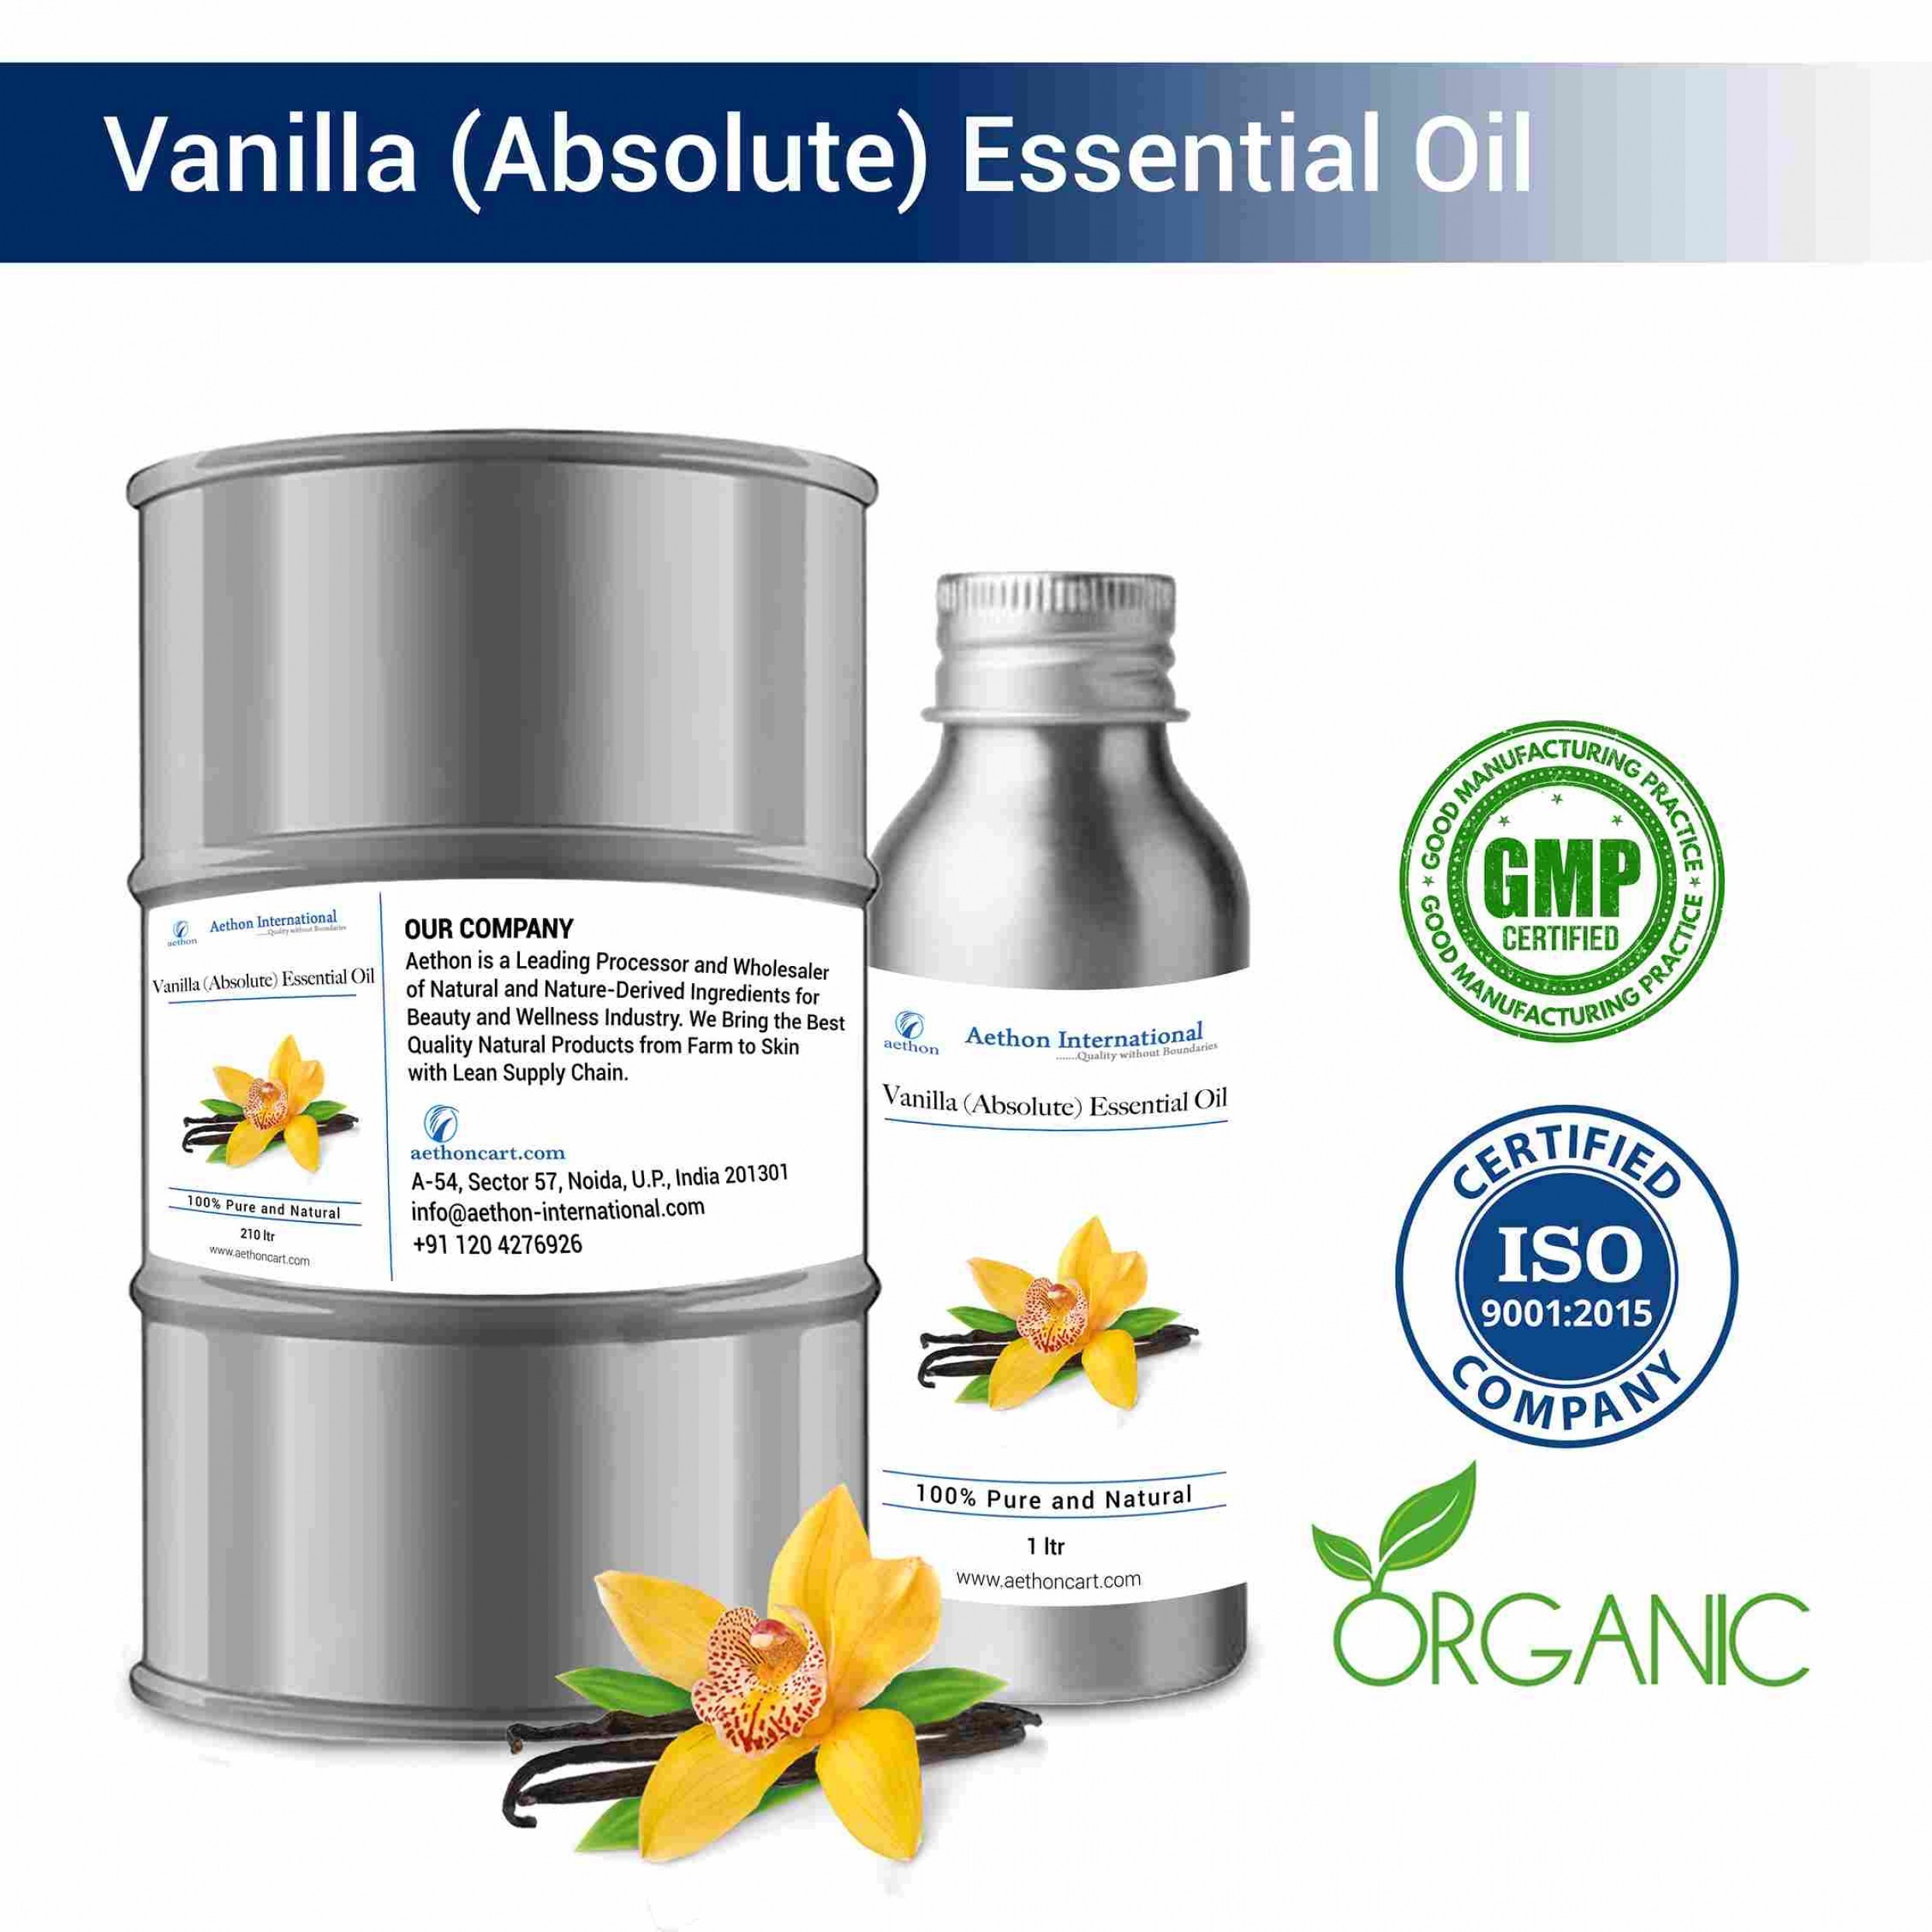 Vanilla (Absolute) Essential Oil